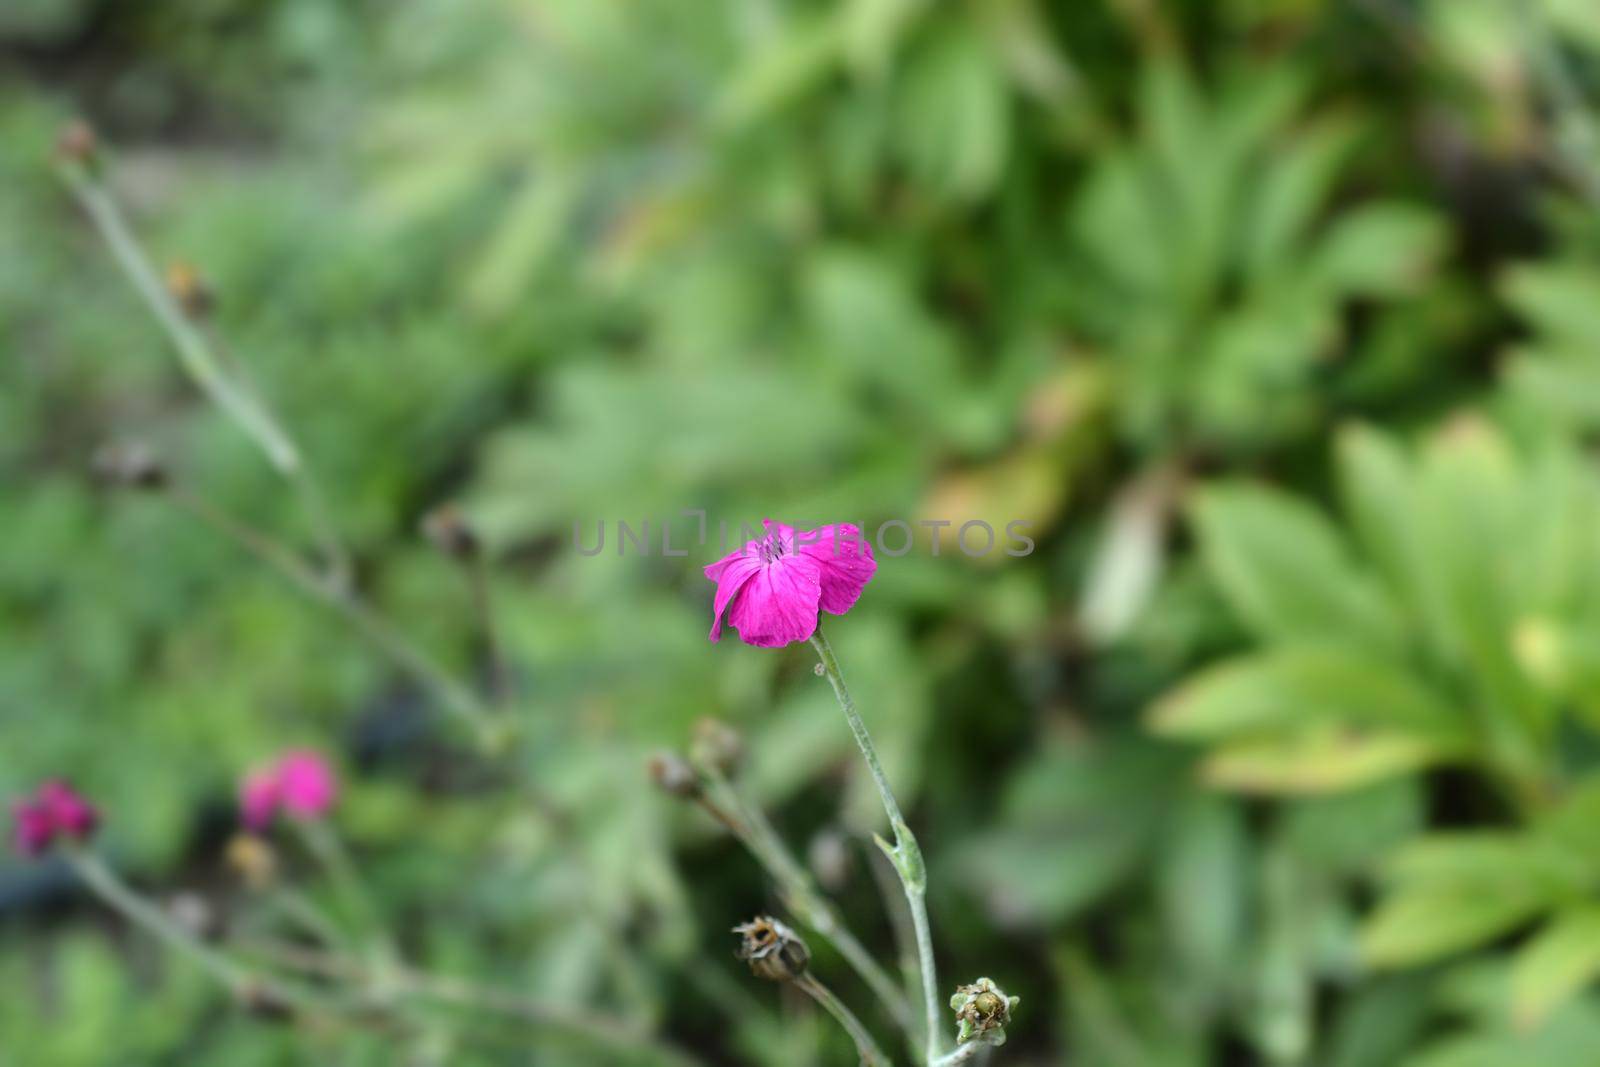 Rose campion flower - Latin name - Silene coronaria (Lychnis coronaria)